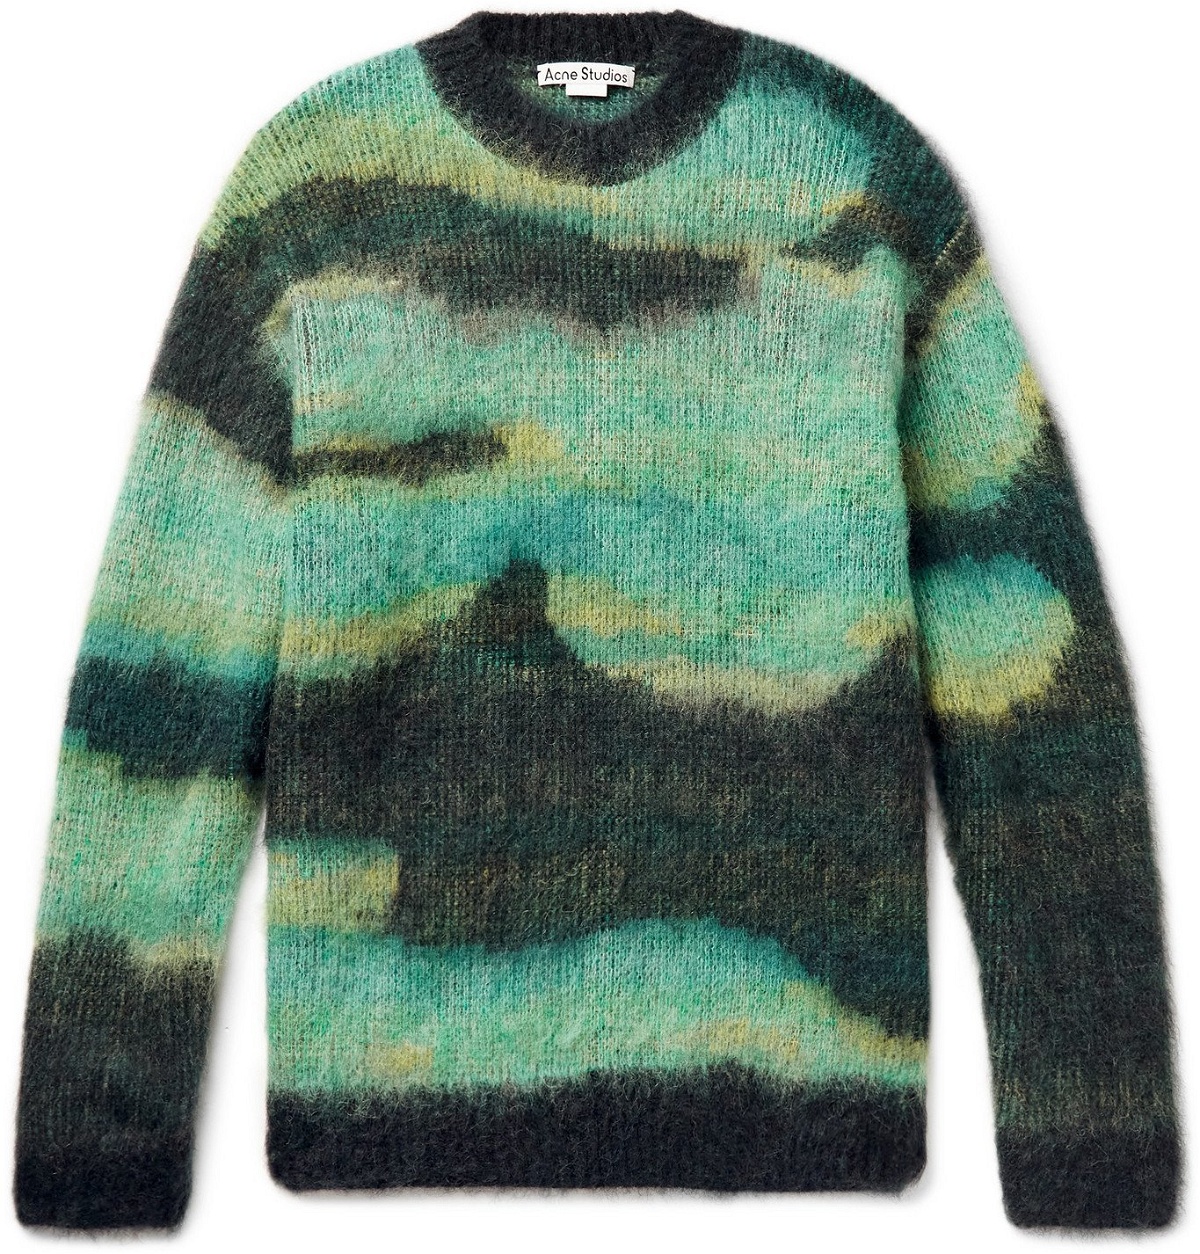 Jacquard Knit Sweater – Both